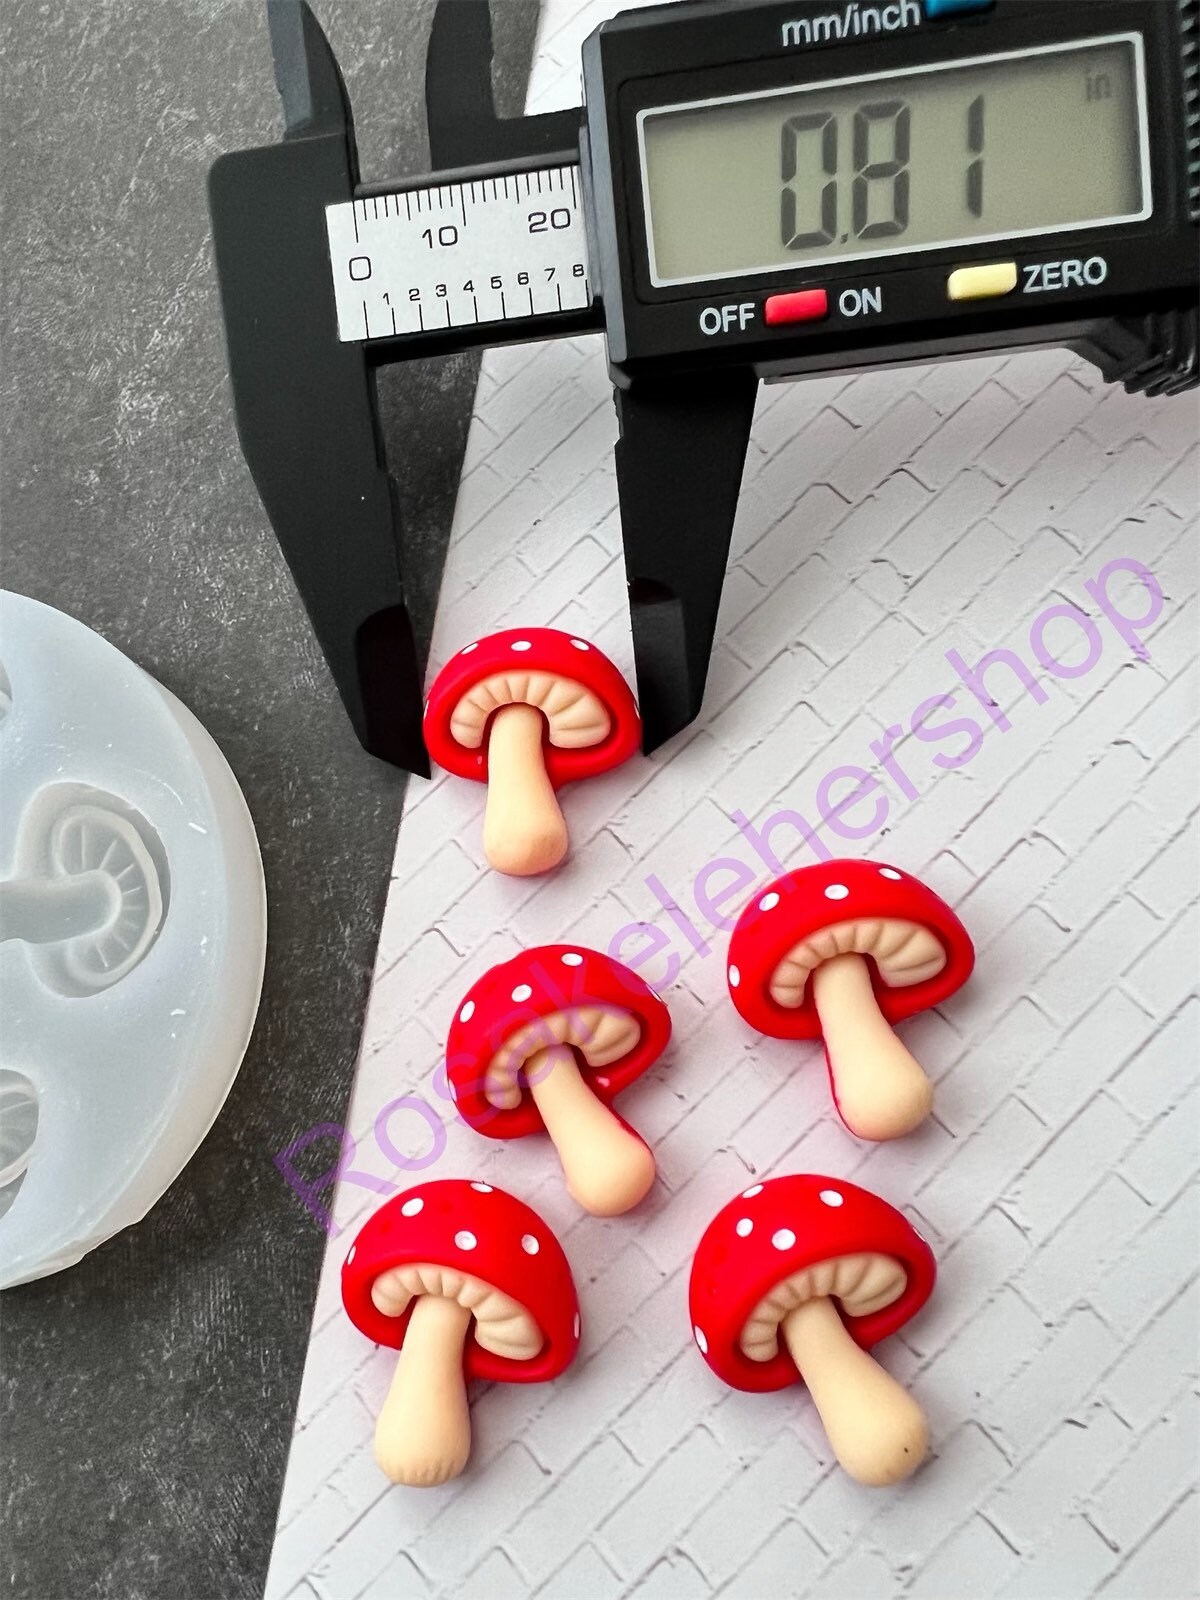 Mushroom Candy Mold, 2 Pack